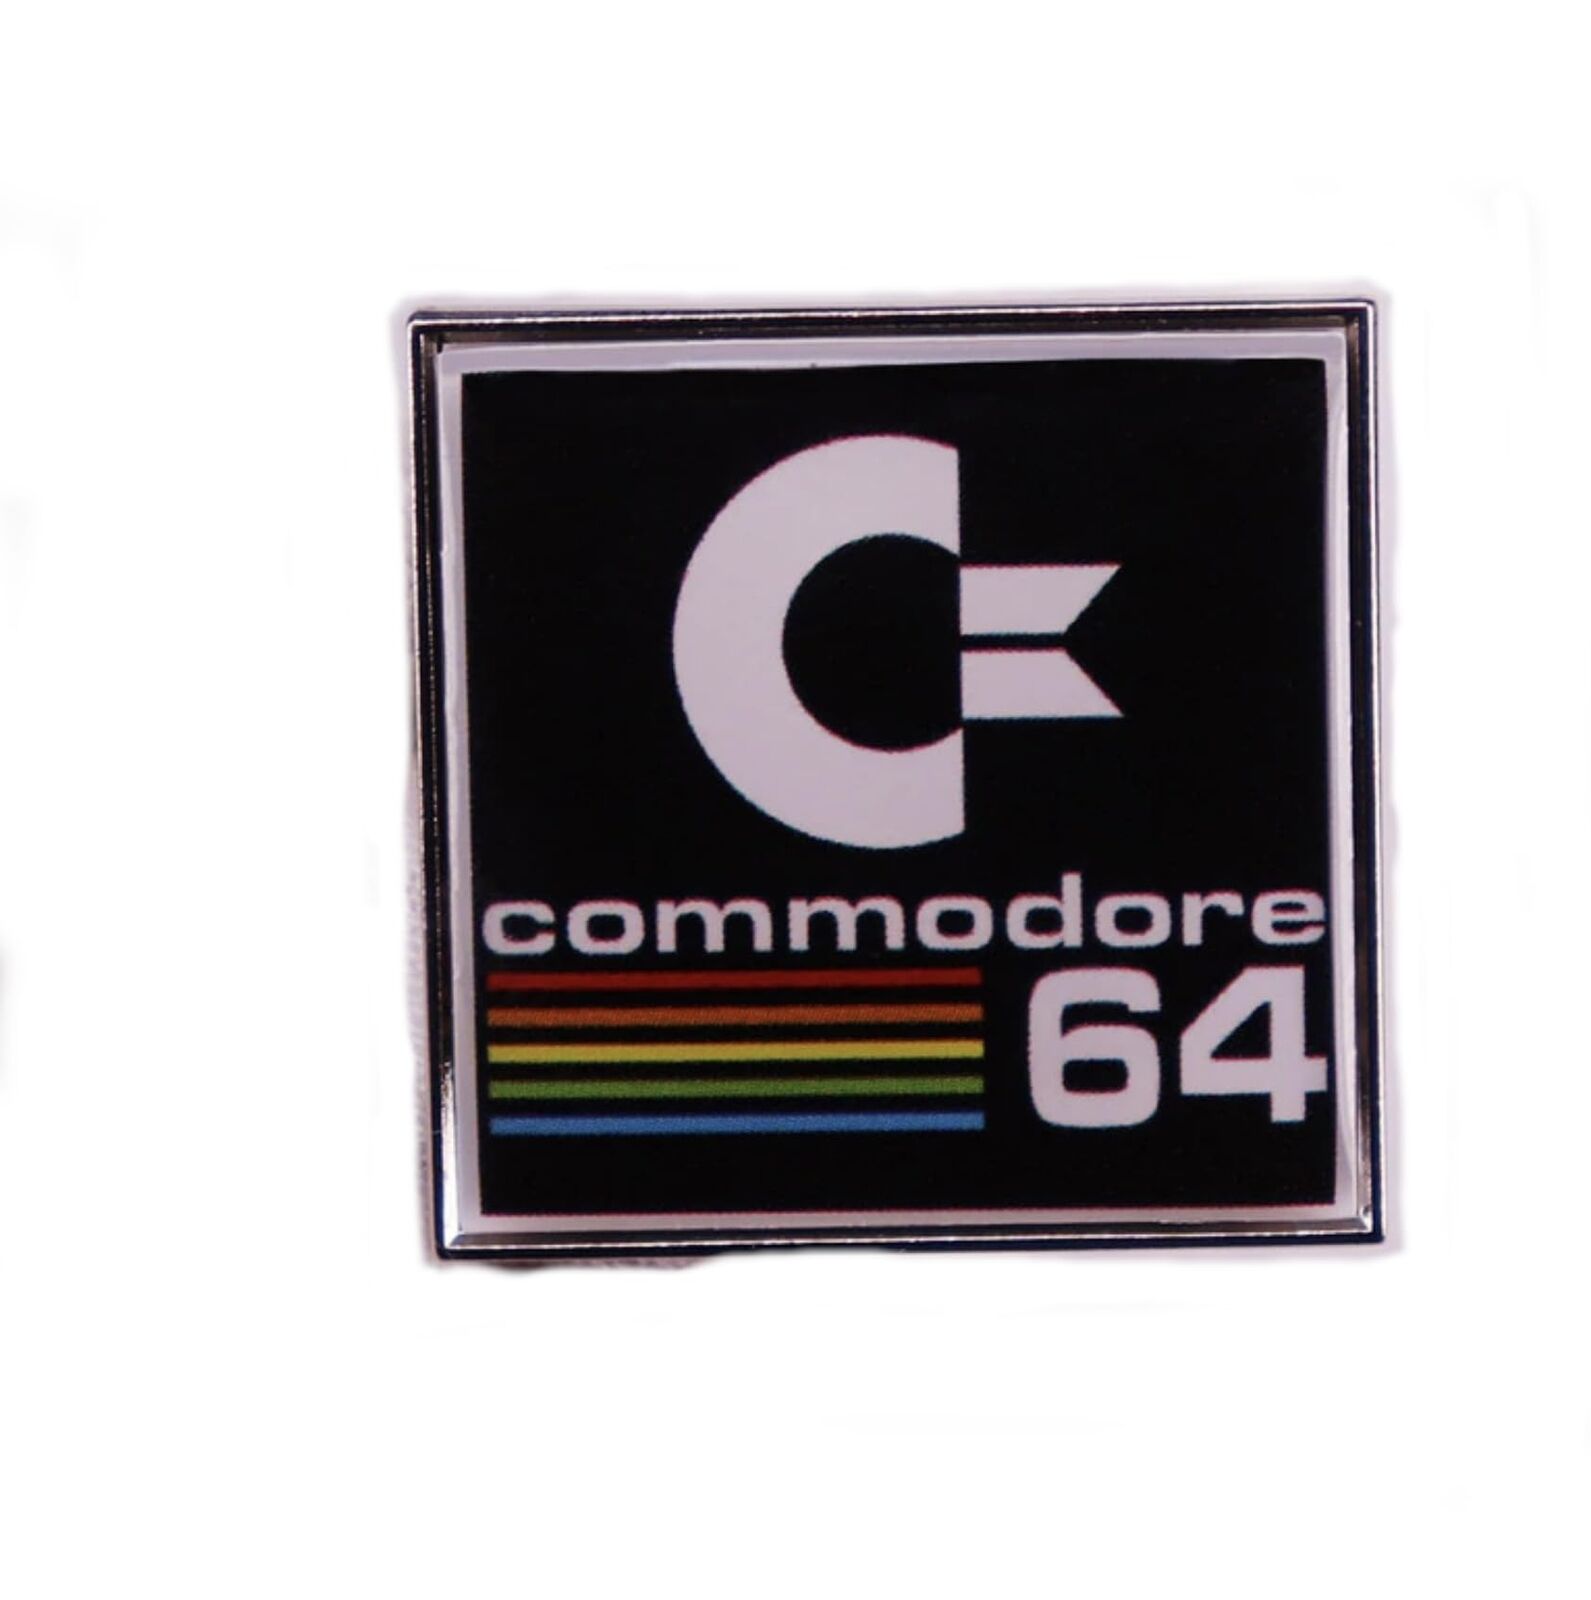 Commodore 64 C64 Home Personal Computer PC Logo Retro Vintage 1980s Enamel Pin